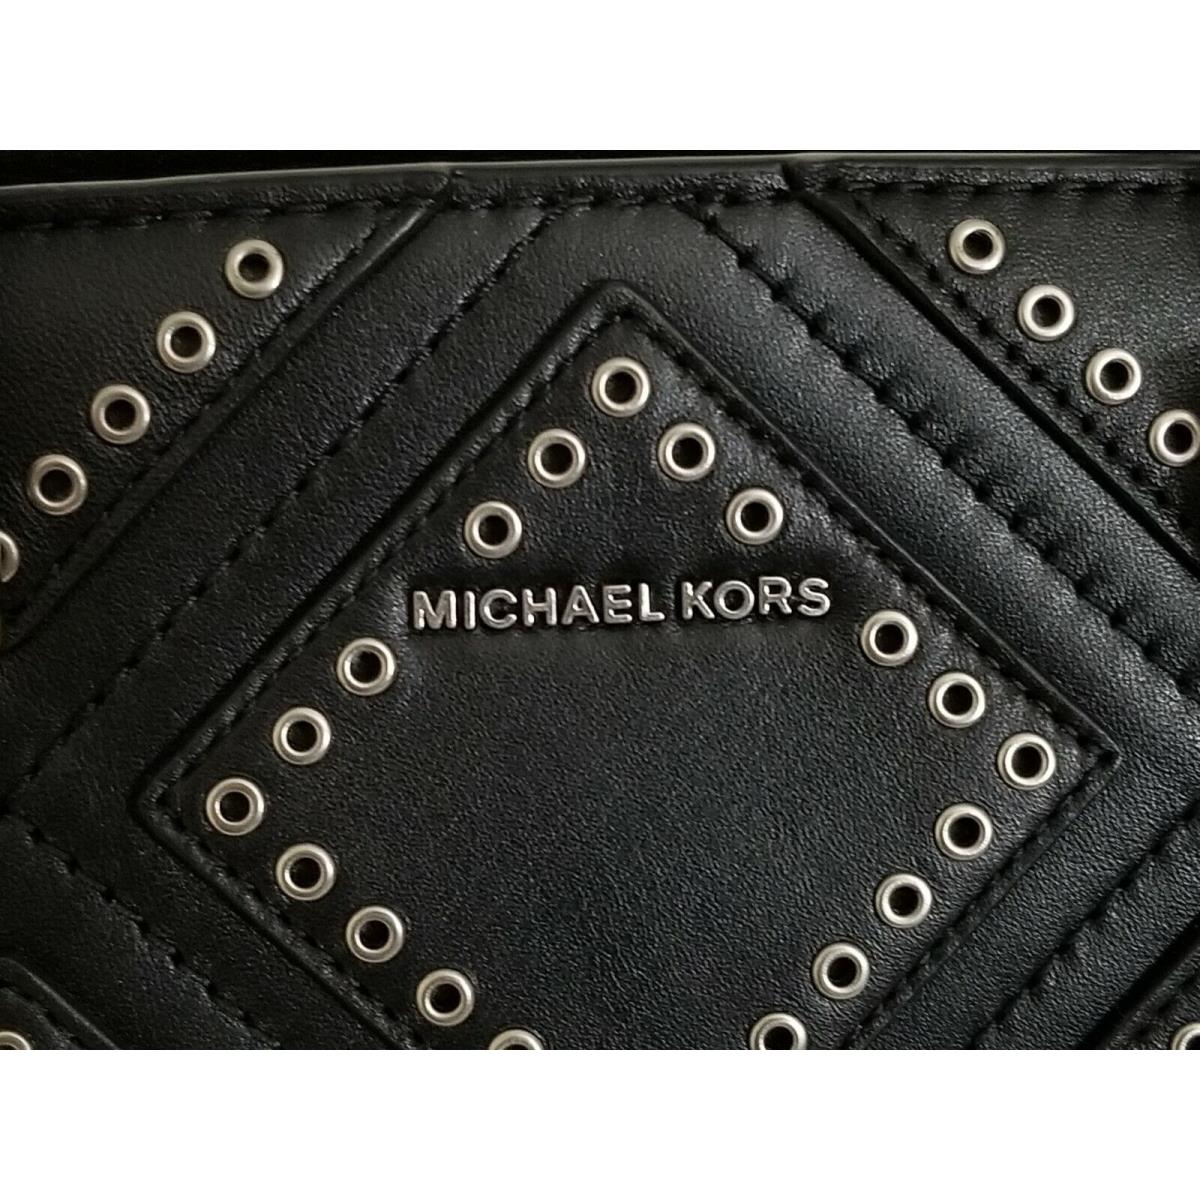 Michael Kors  bag  MCHAEL KORS SELMA - BEIGE Lining, Black Exterior 6